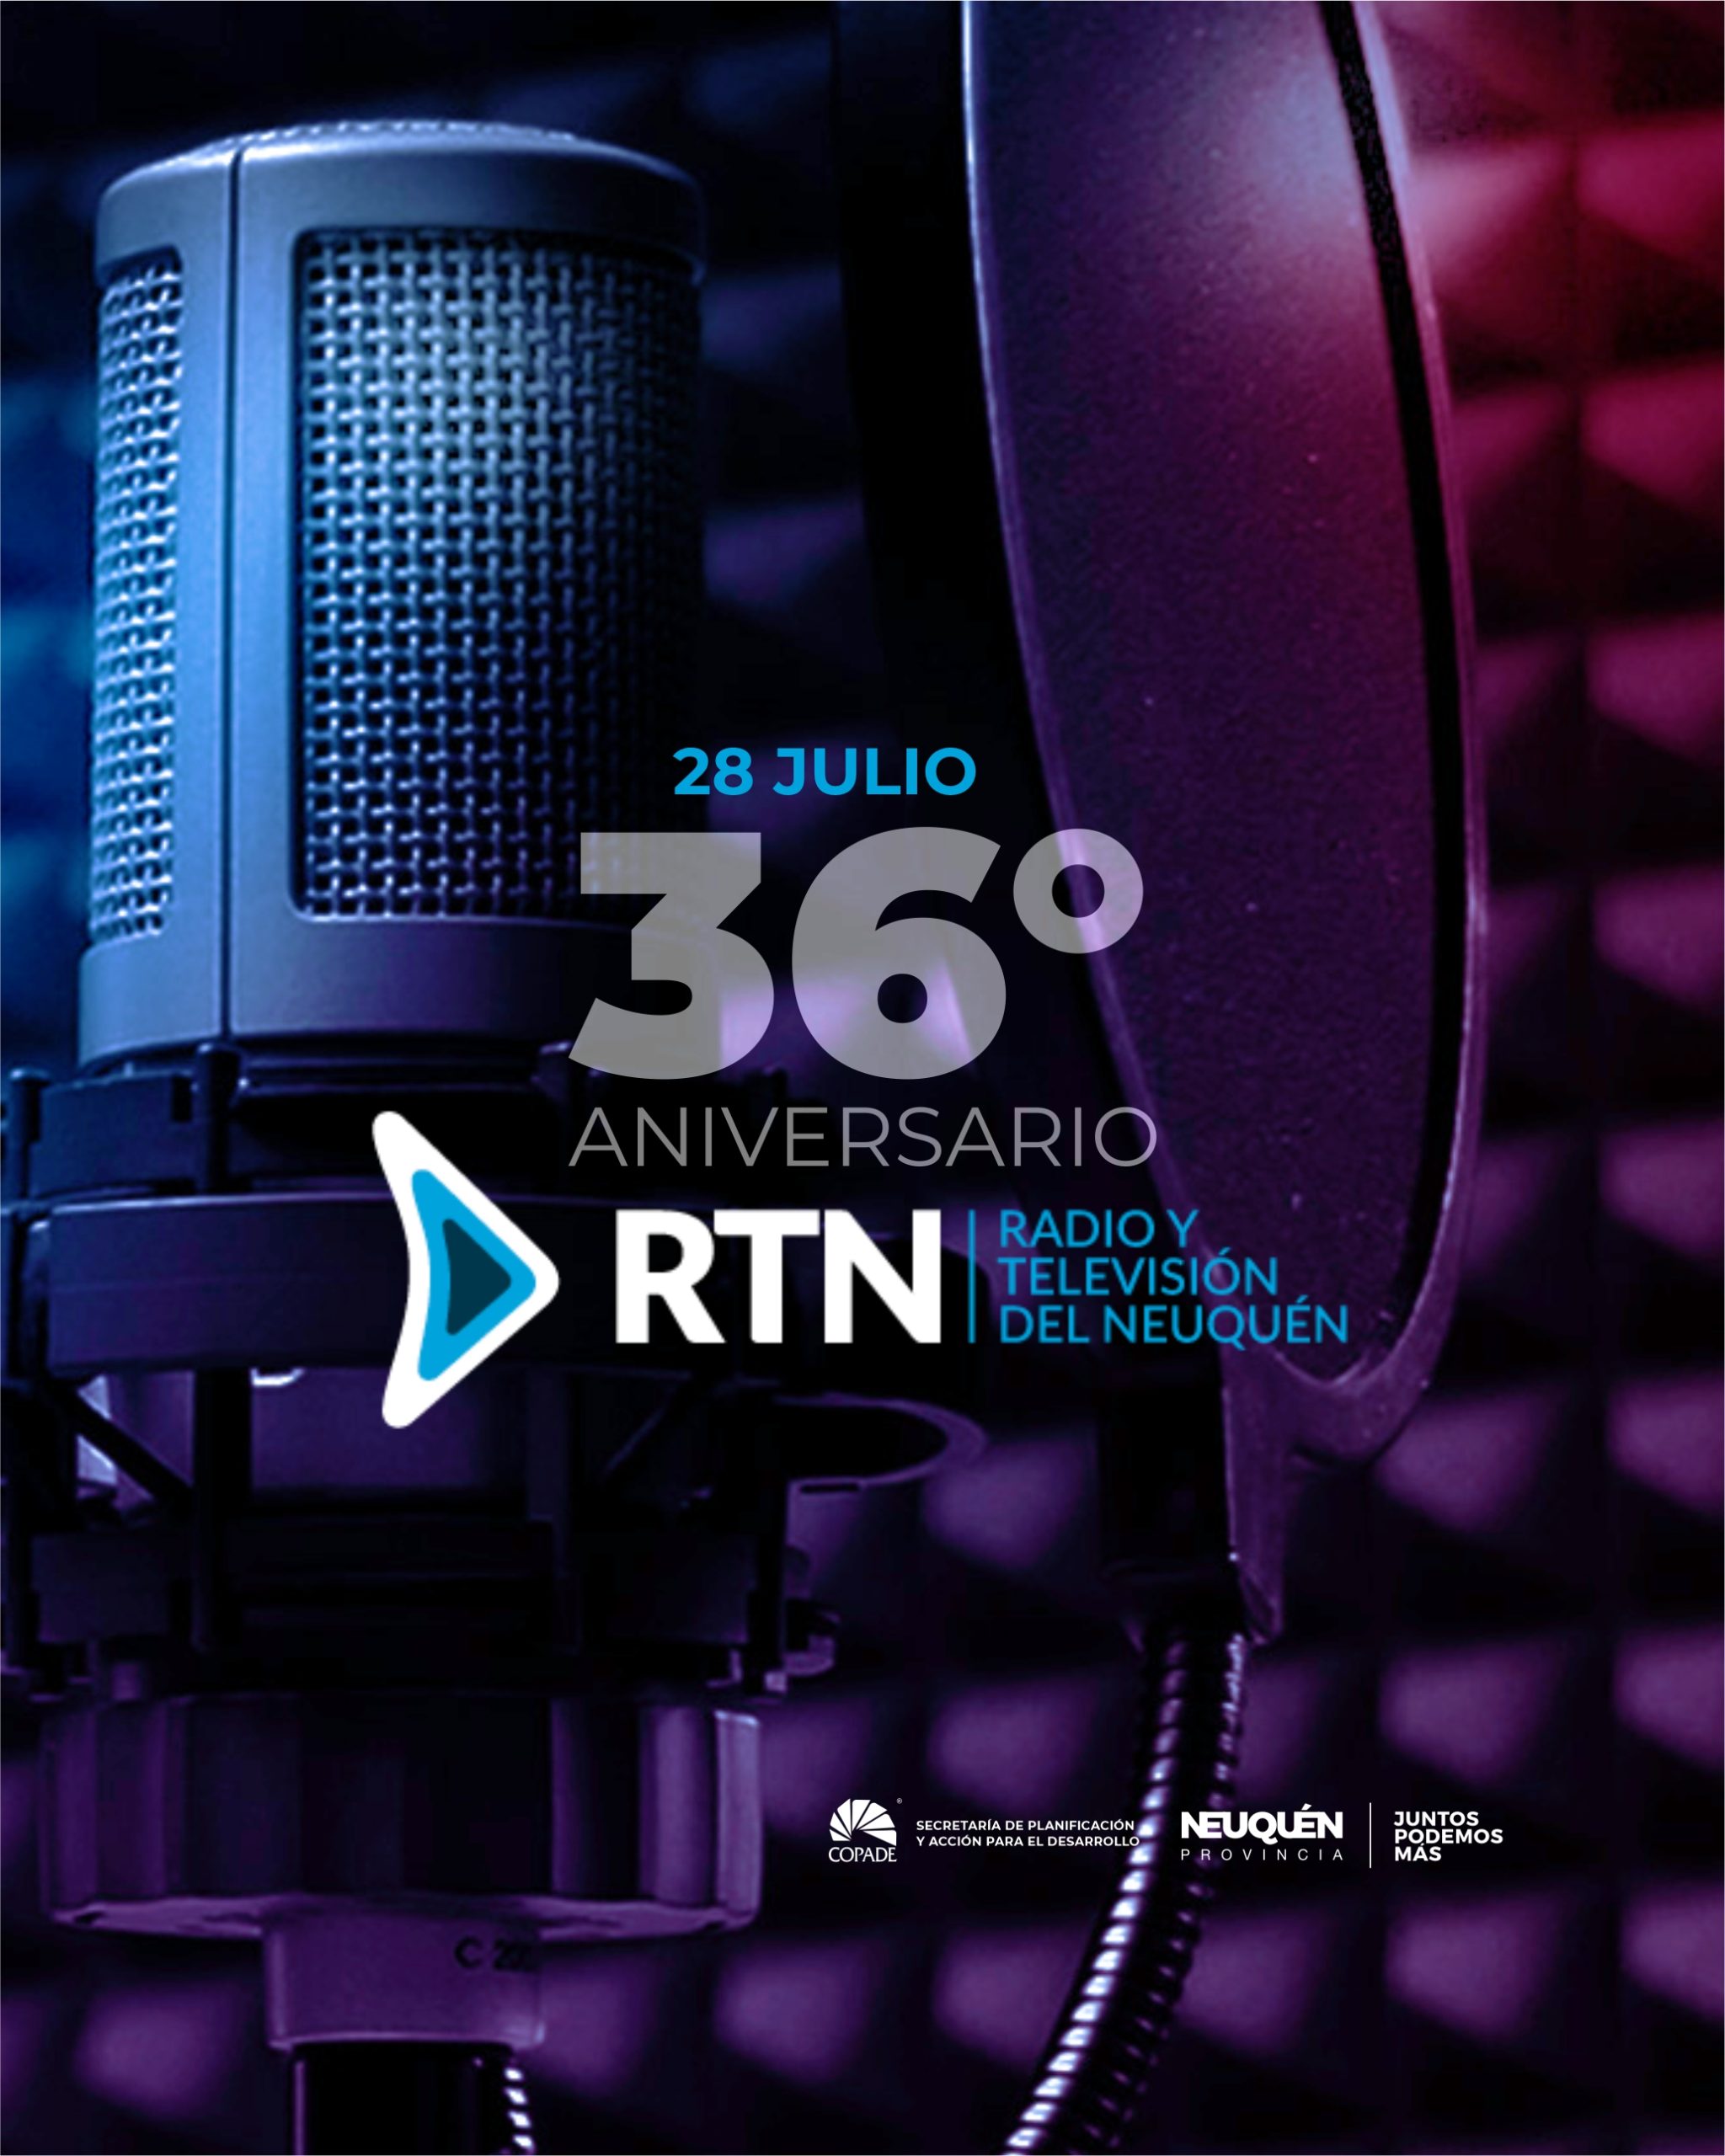 26 de julio: Aniversario RTN